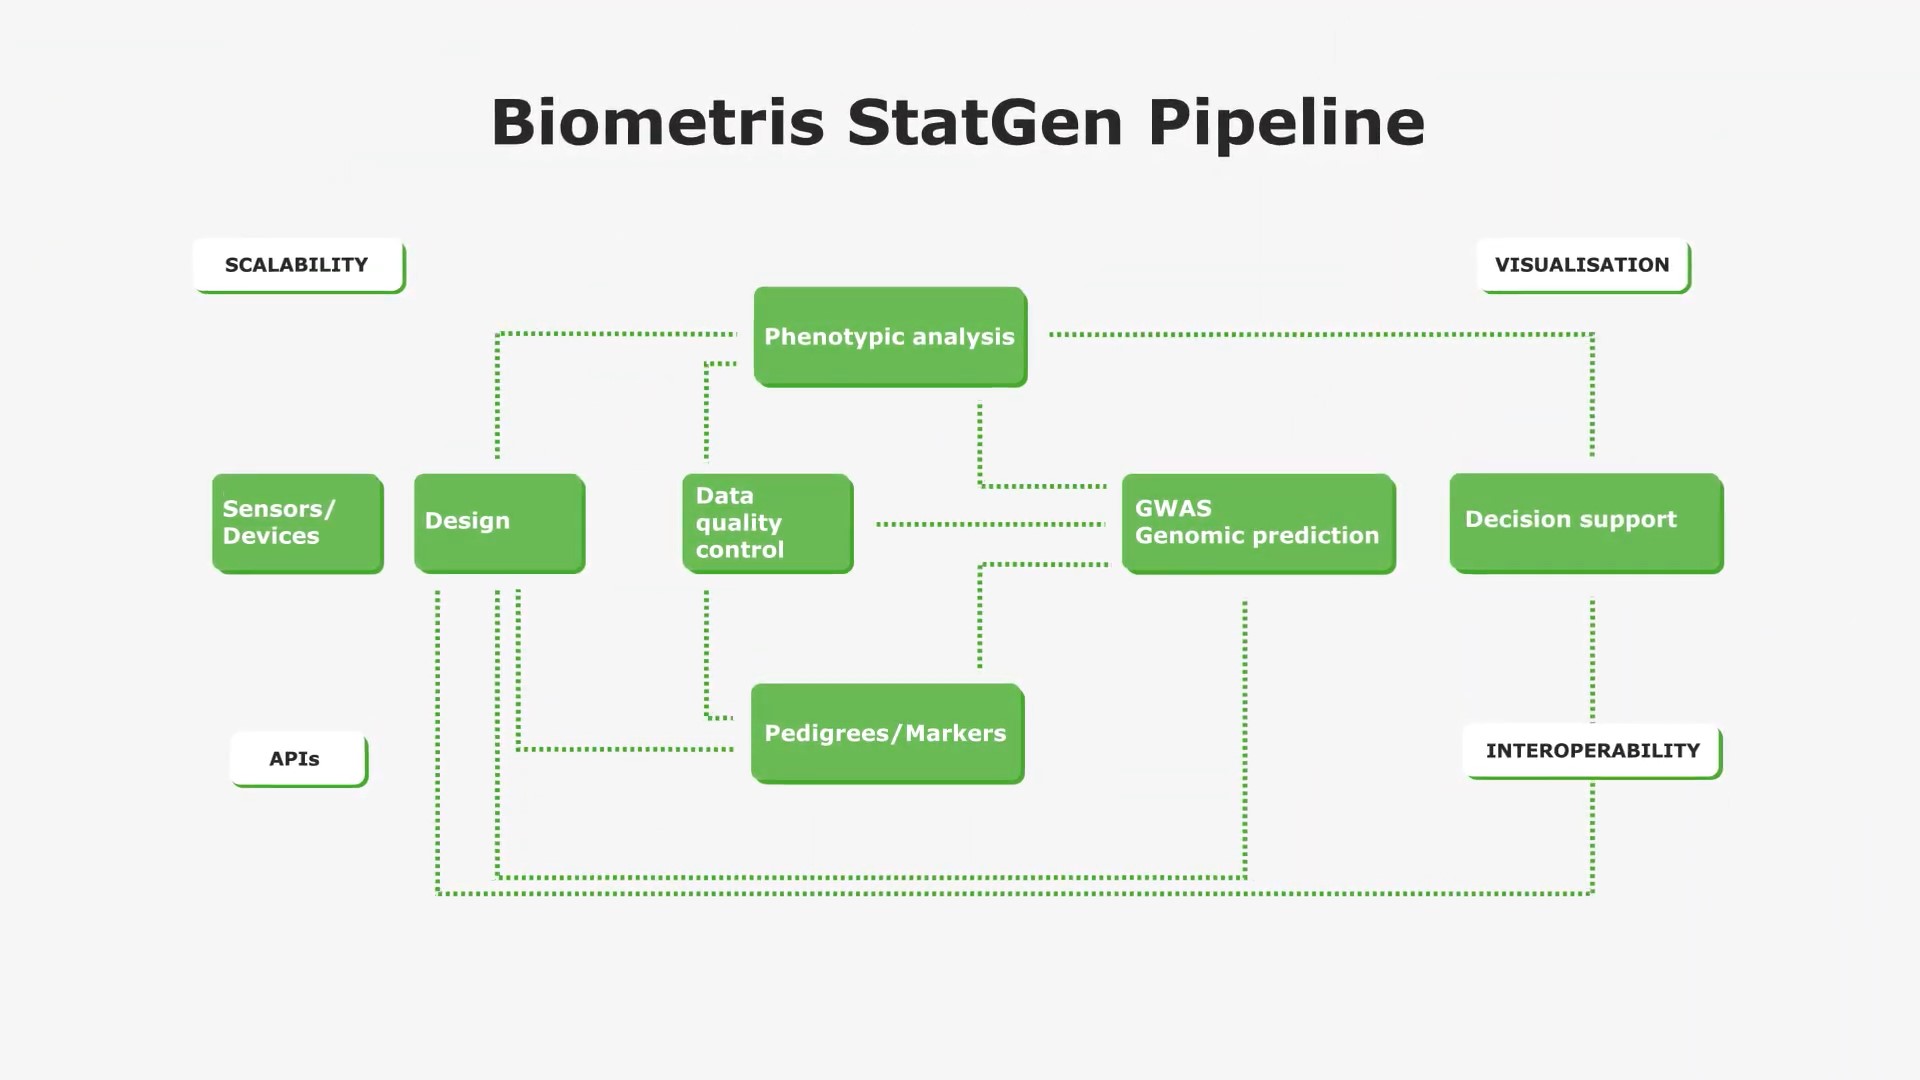 Visual scheme of the Biometris StatGen Pipeline